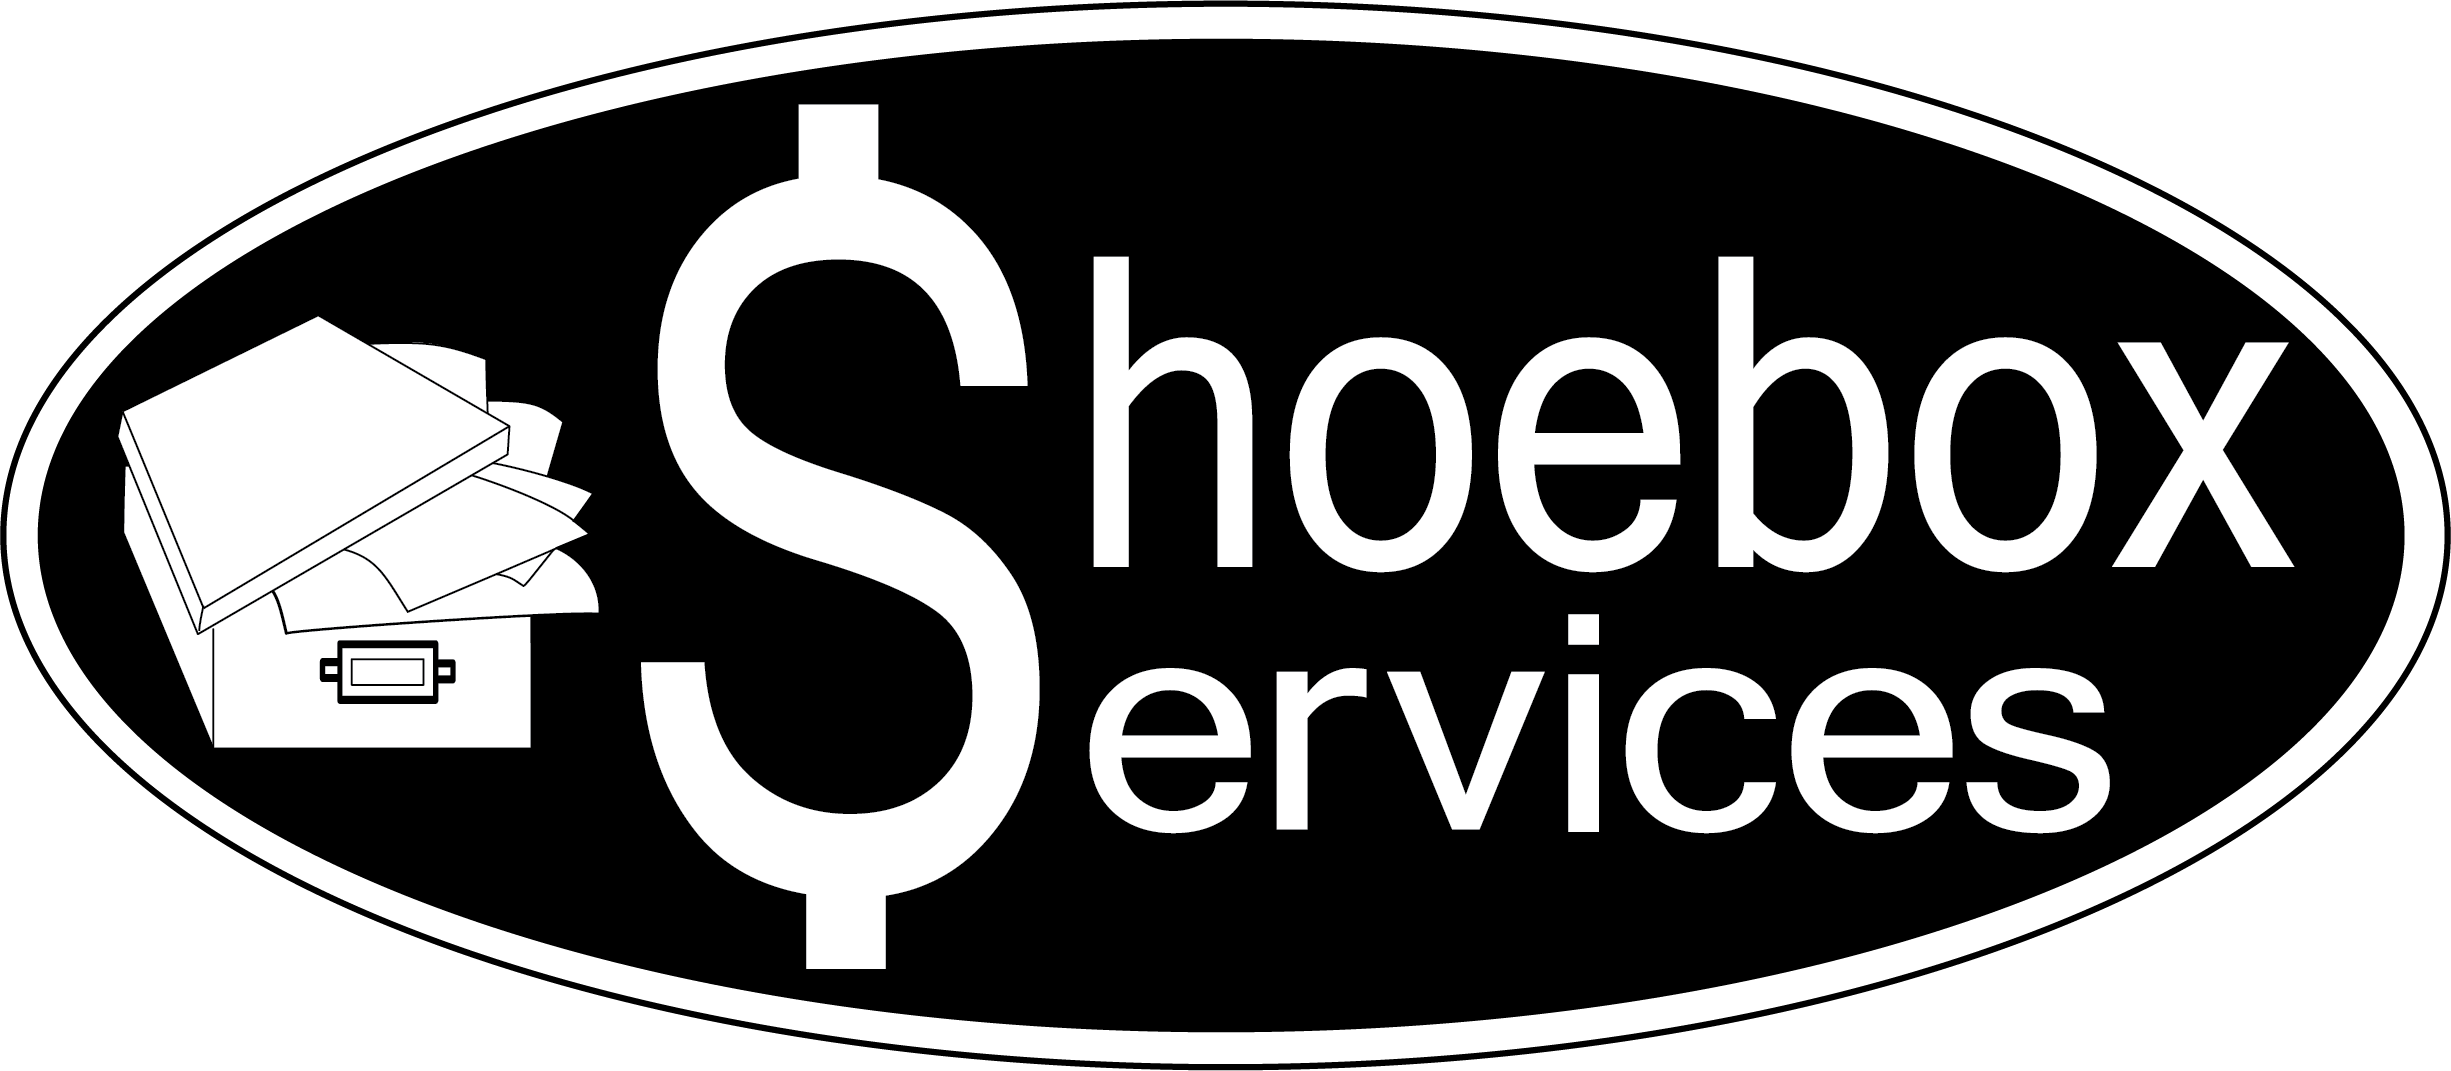 shoebox-logo